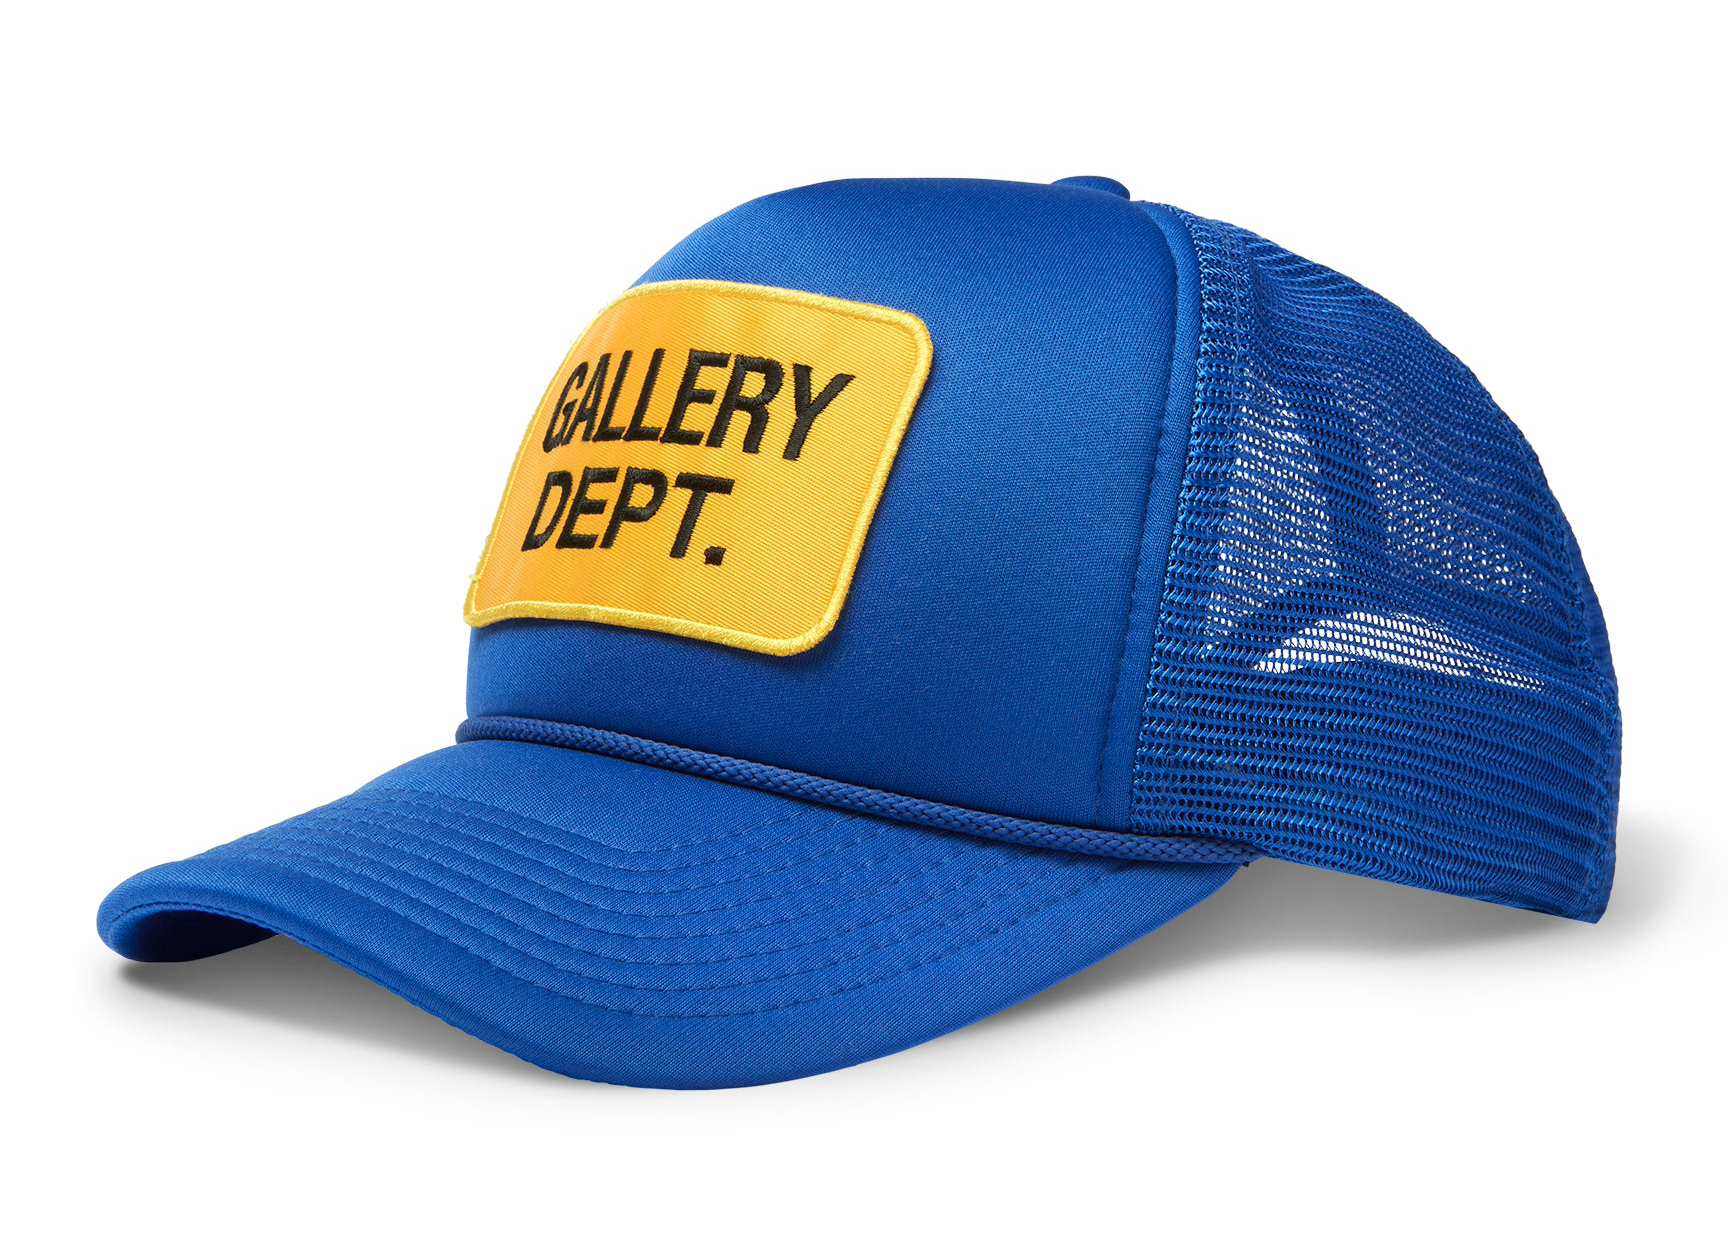 GALLERY DEPT. キャップ - 帽子